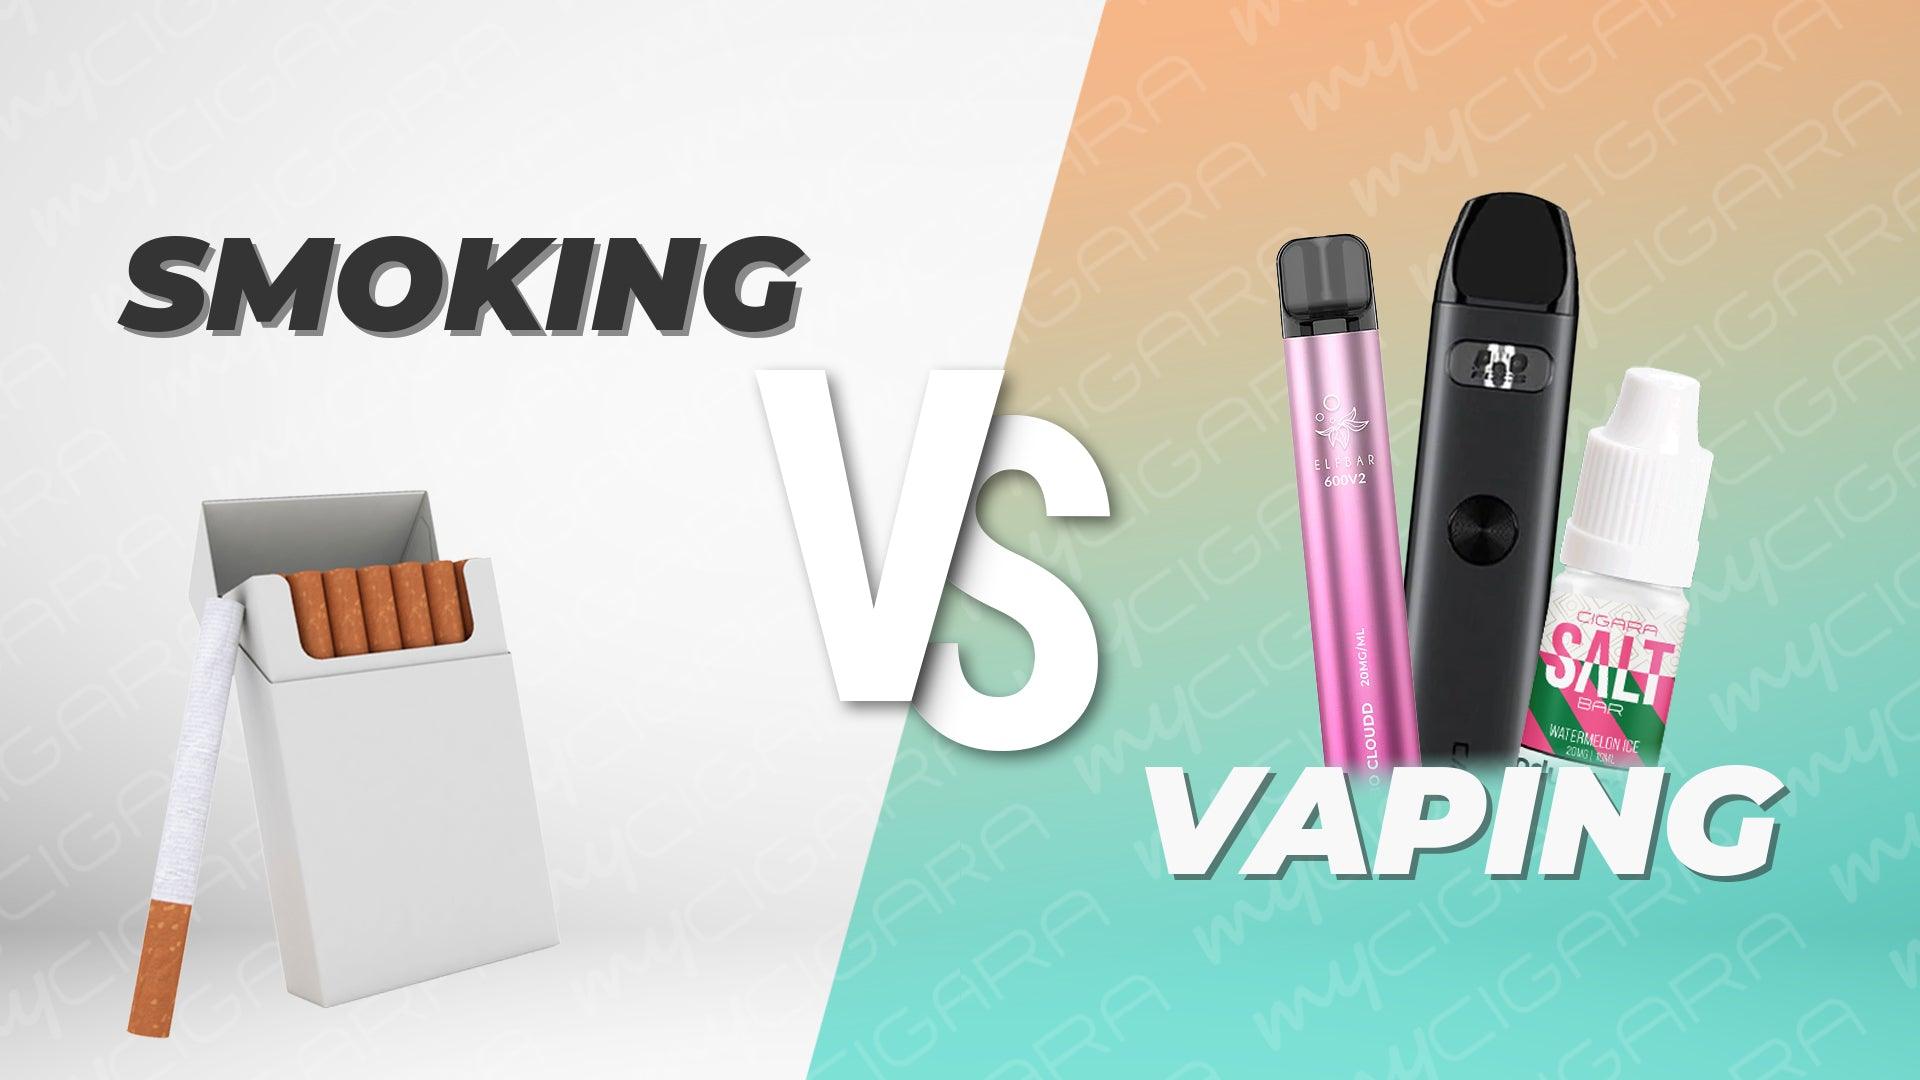 Smoking Vs Vaping - Category:Health, Category:Vaping, Sub Category:Quit Smoking